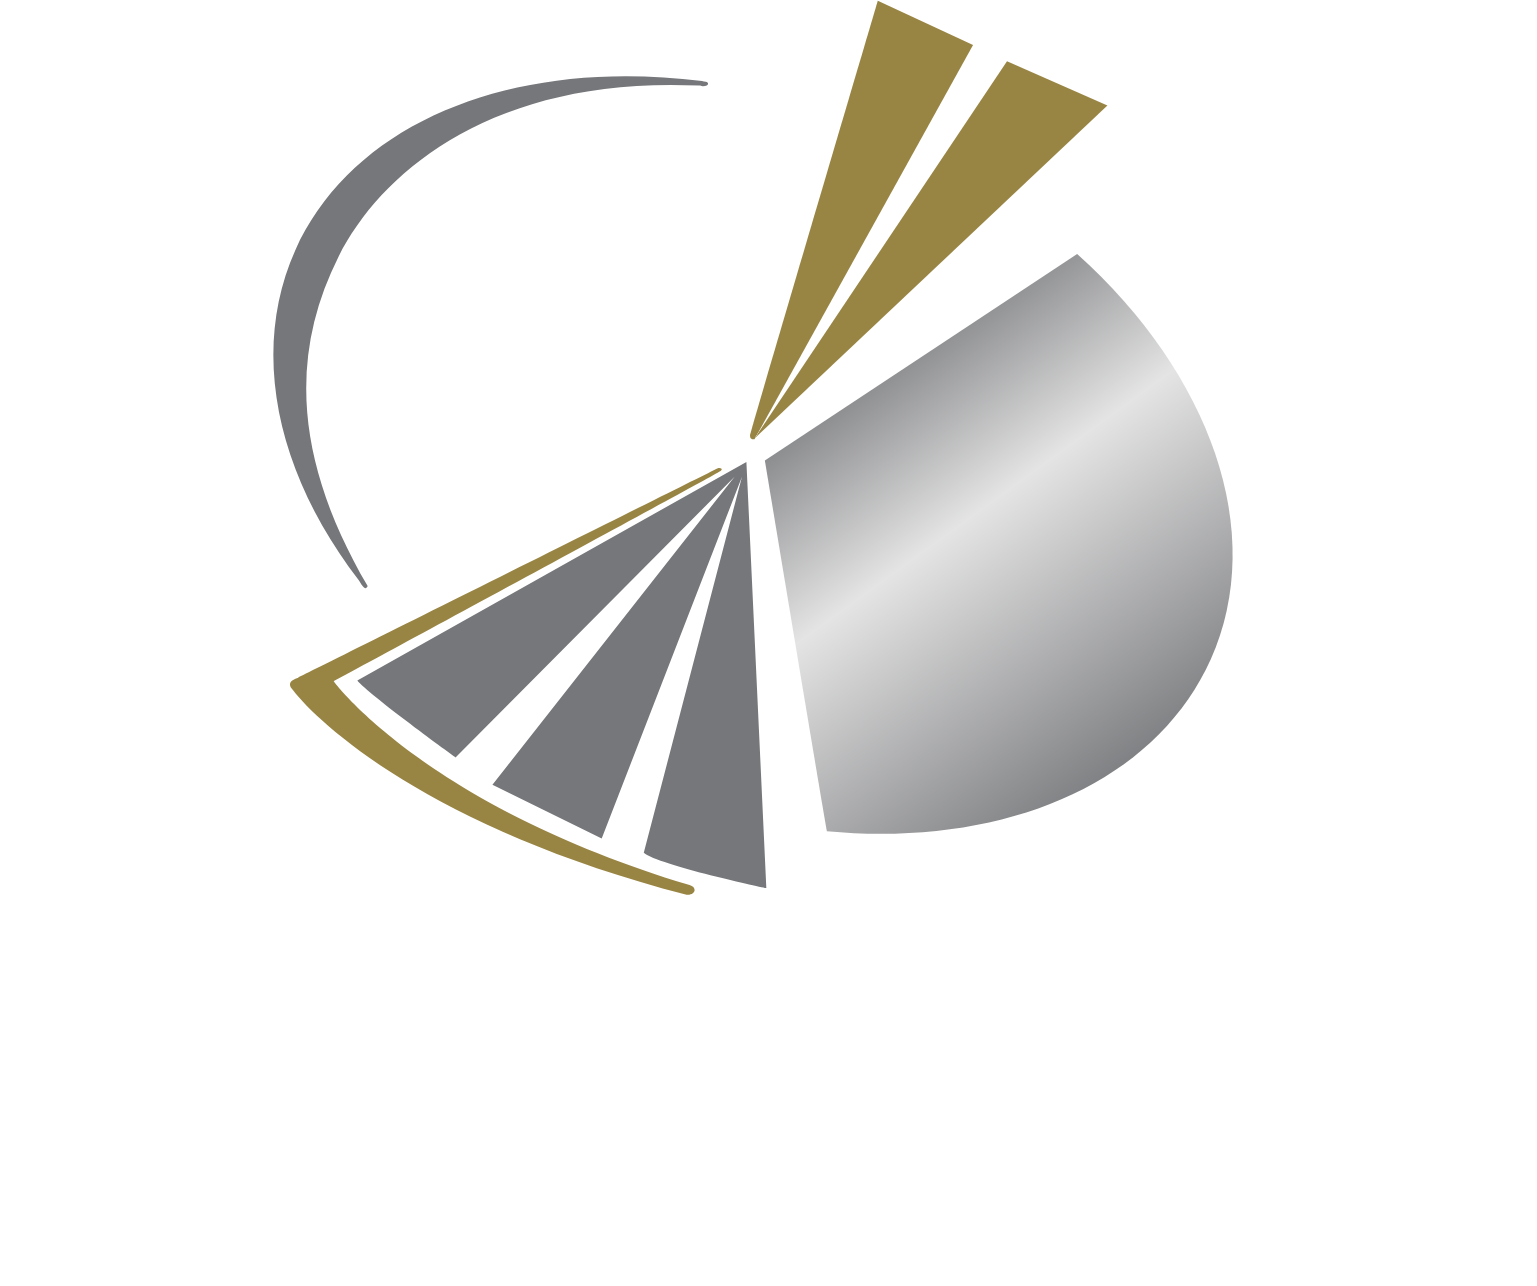 Qatari Investors Group logo large for dark backgrounds (transparent PNG)